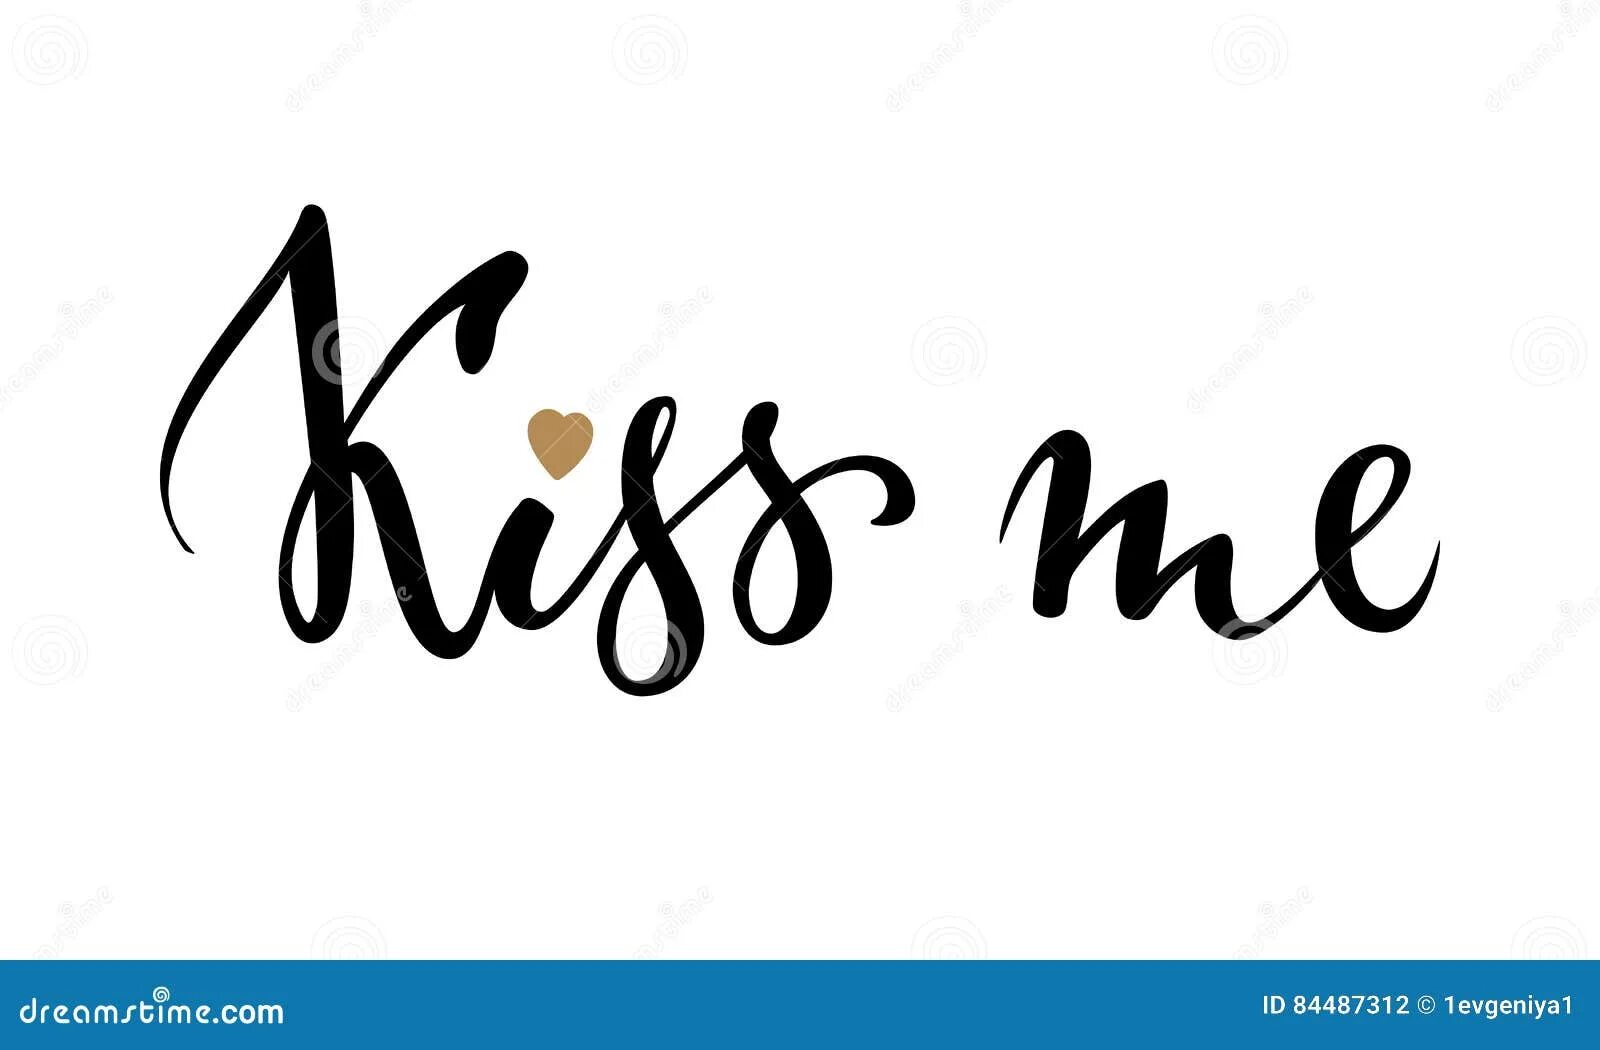 Надпись Kiss me. Красивая надпись Кисс ми. Kiss me красивым шрифтом. Надпись кис ми красивым шрифтом. Лайк ми кис ми